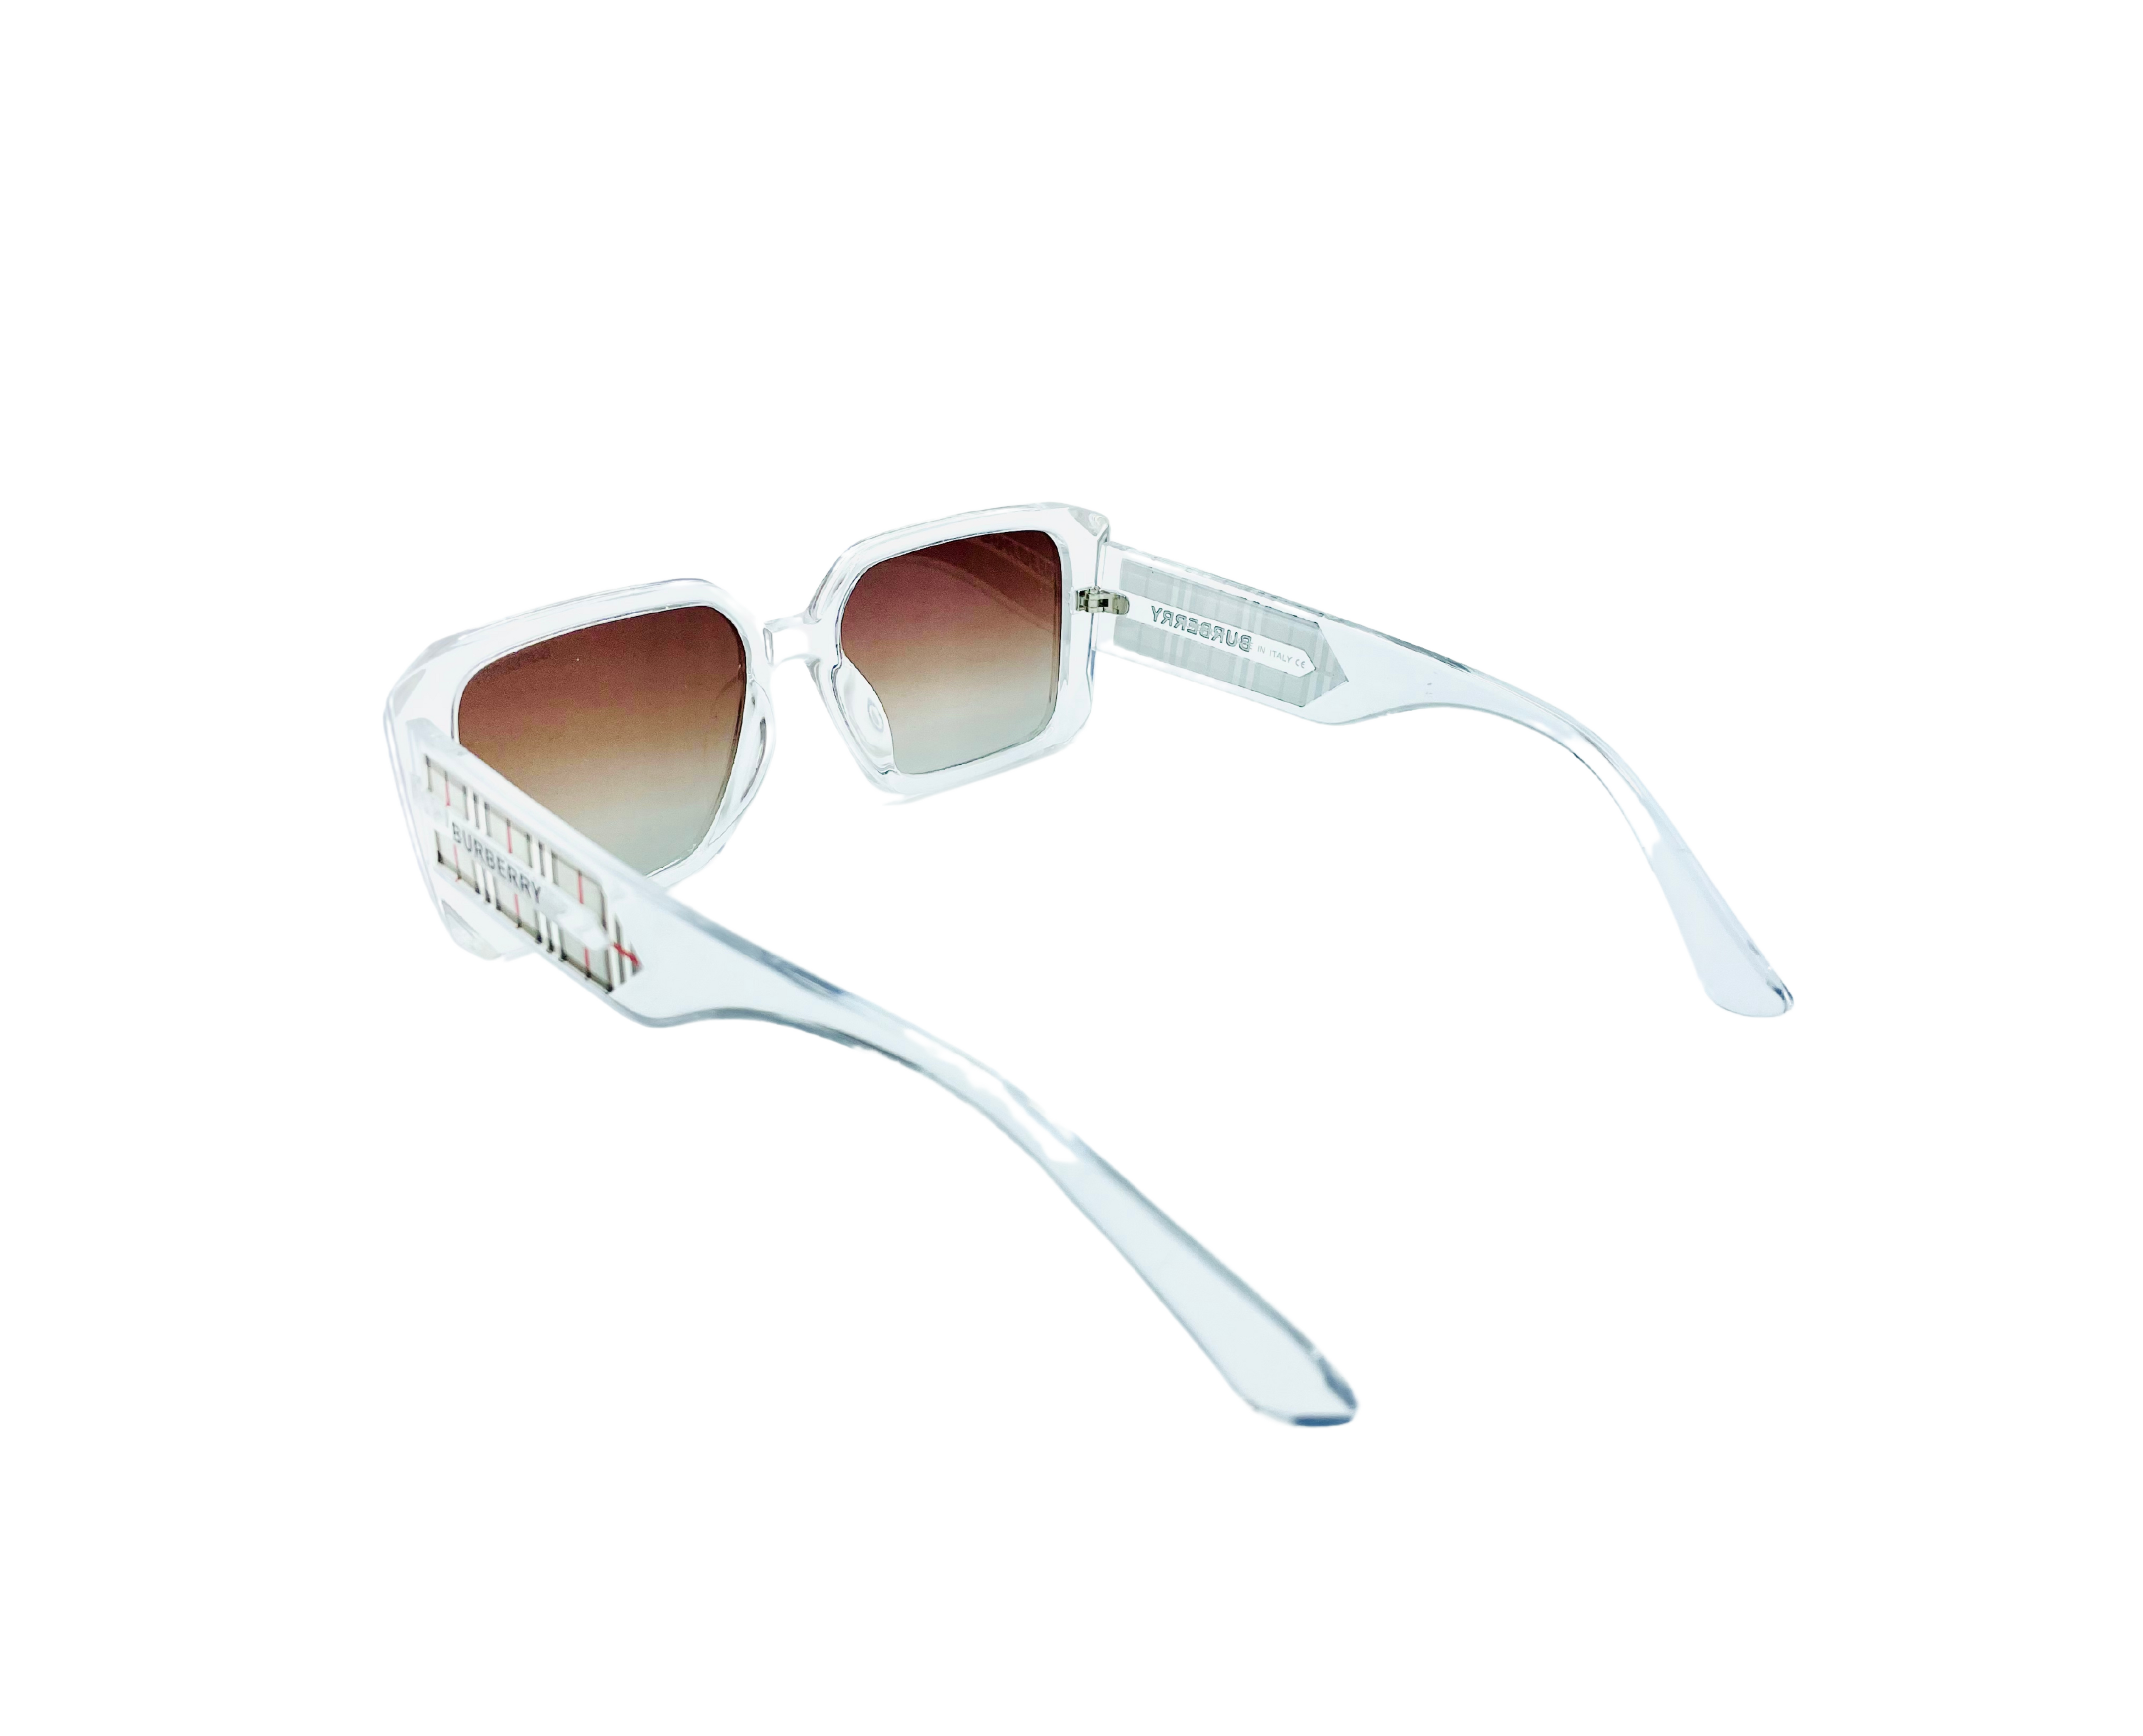 NS Classic - 22339 - Transparent - Polarized Sunglasses